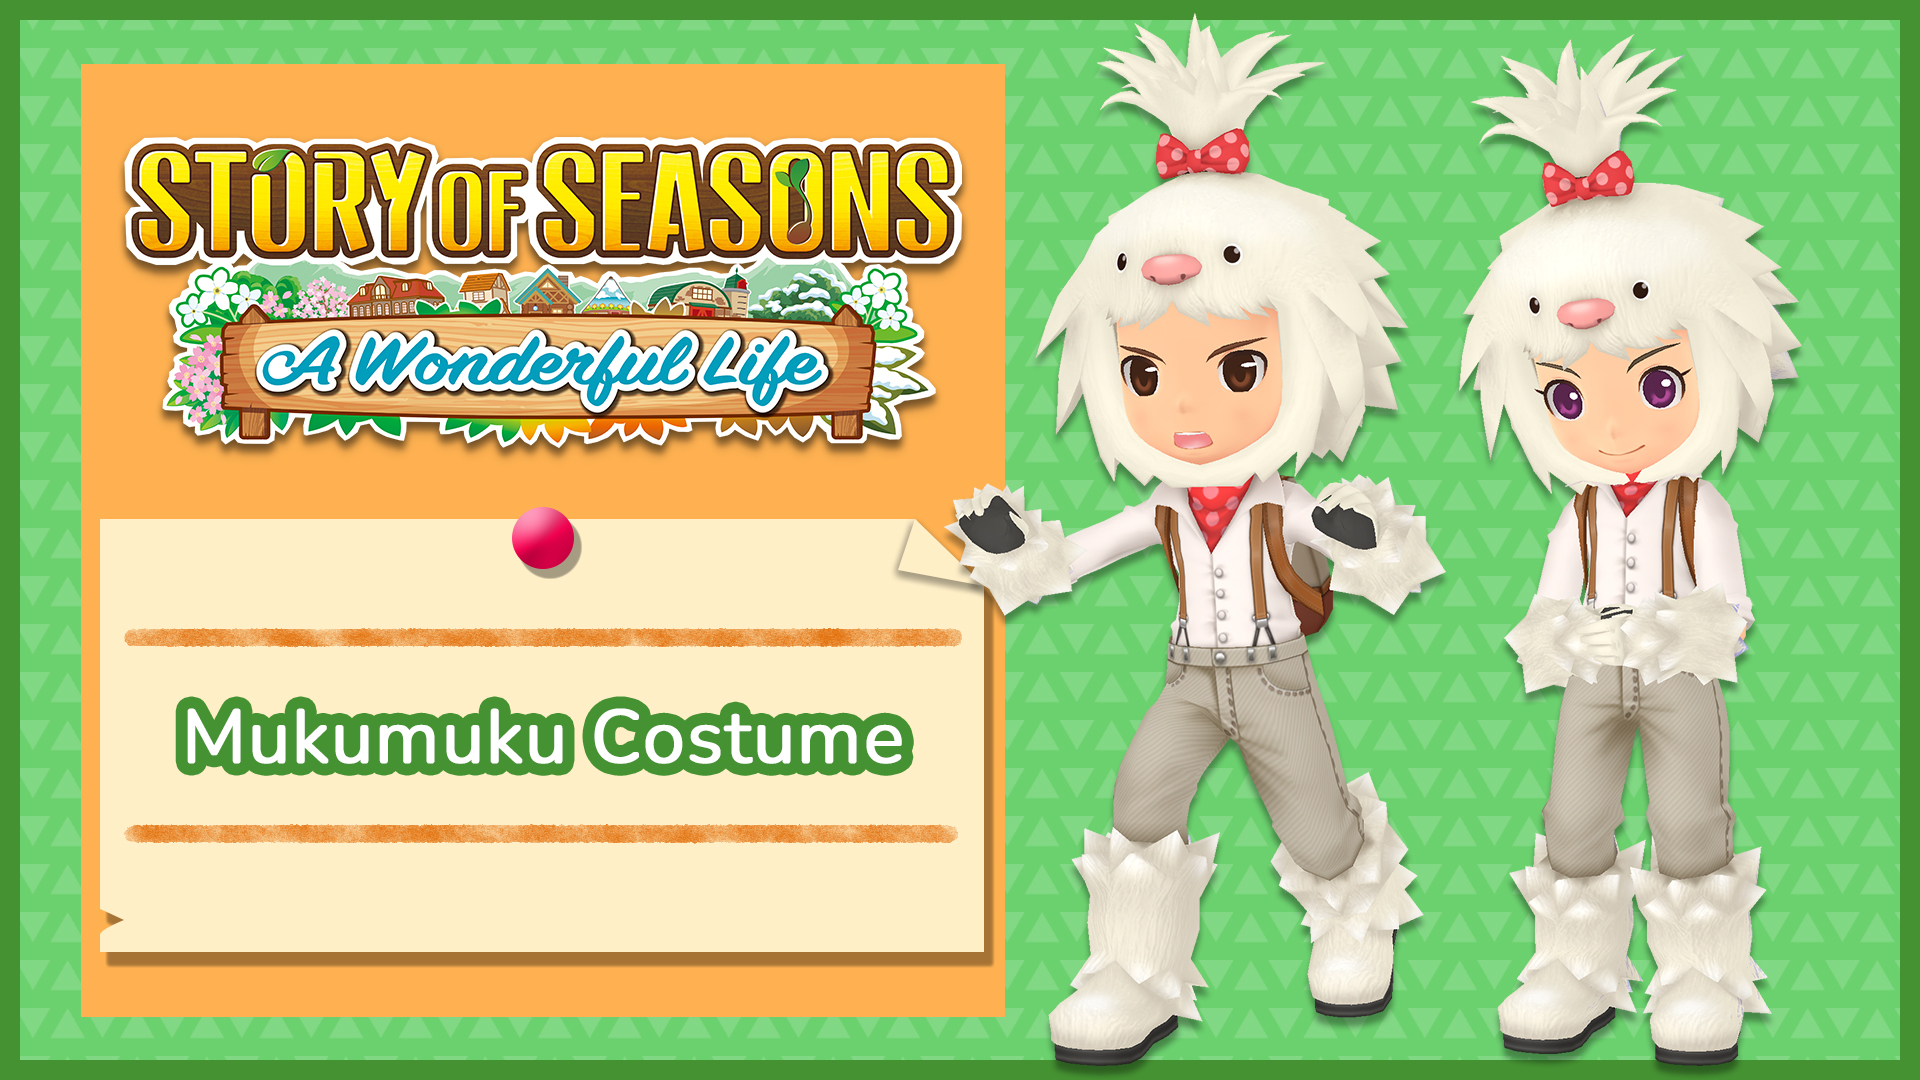 See the New Story of Seasons: A Wonderful Life Trailer and Mukumuku Costume